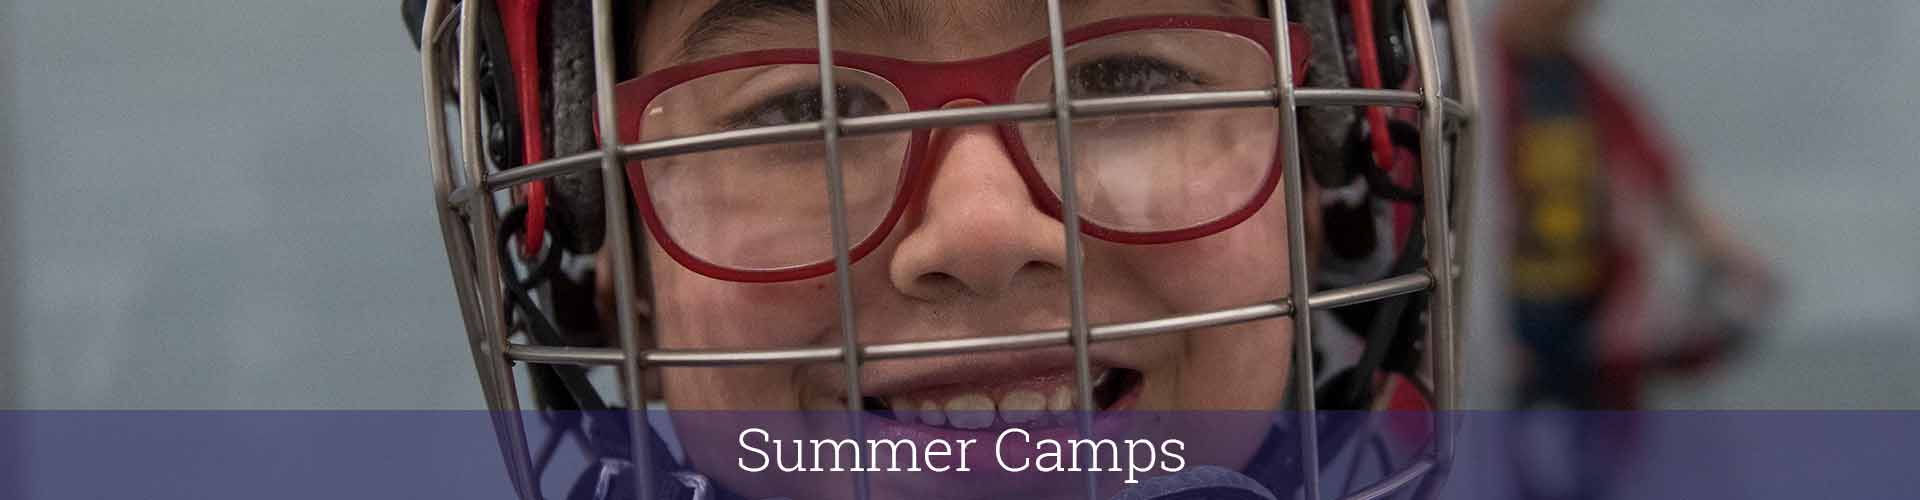 h-summercamps